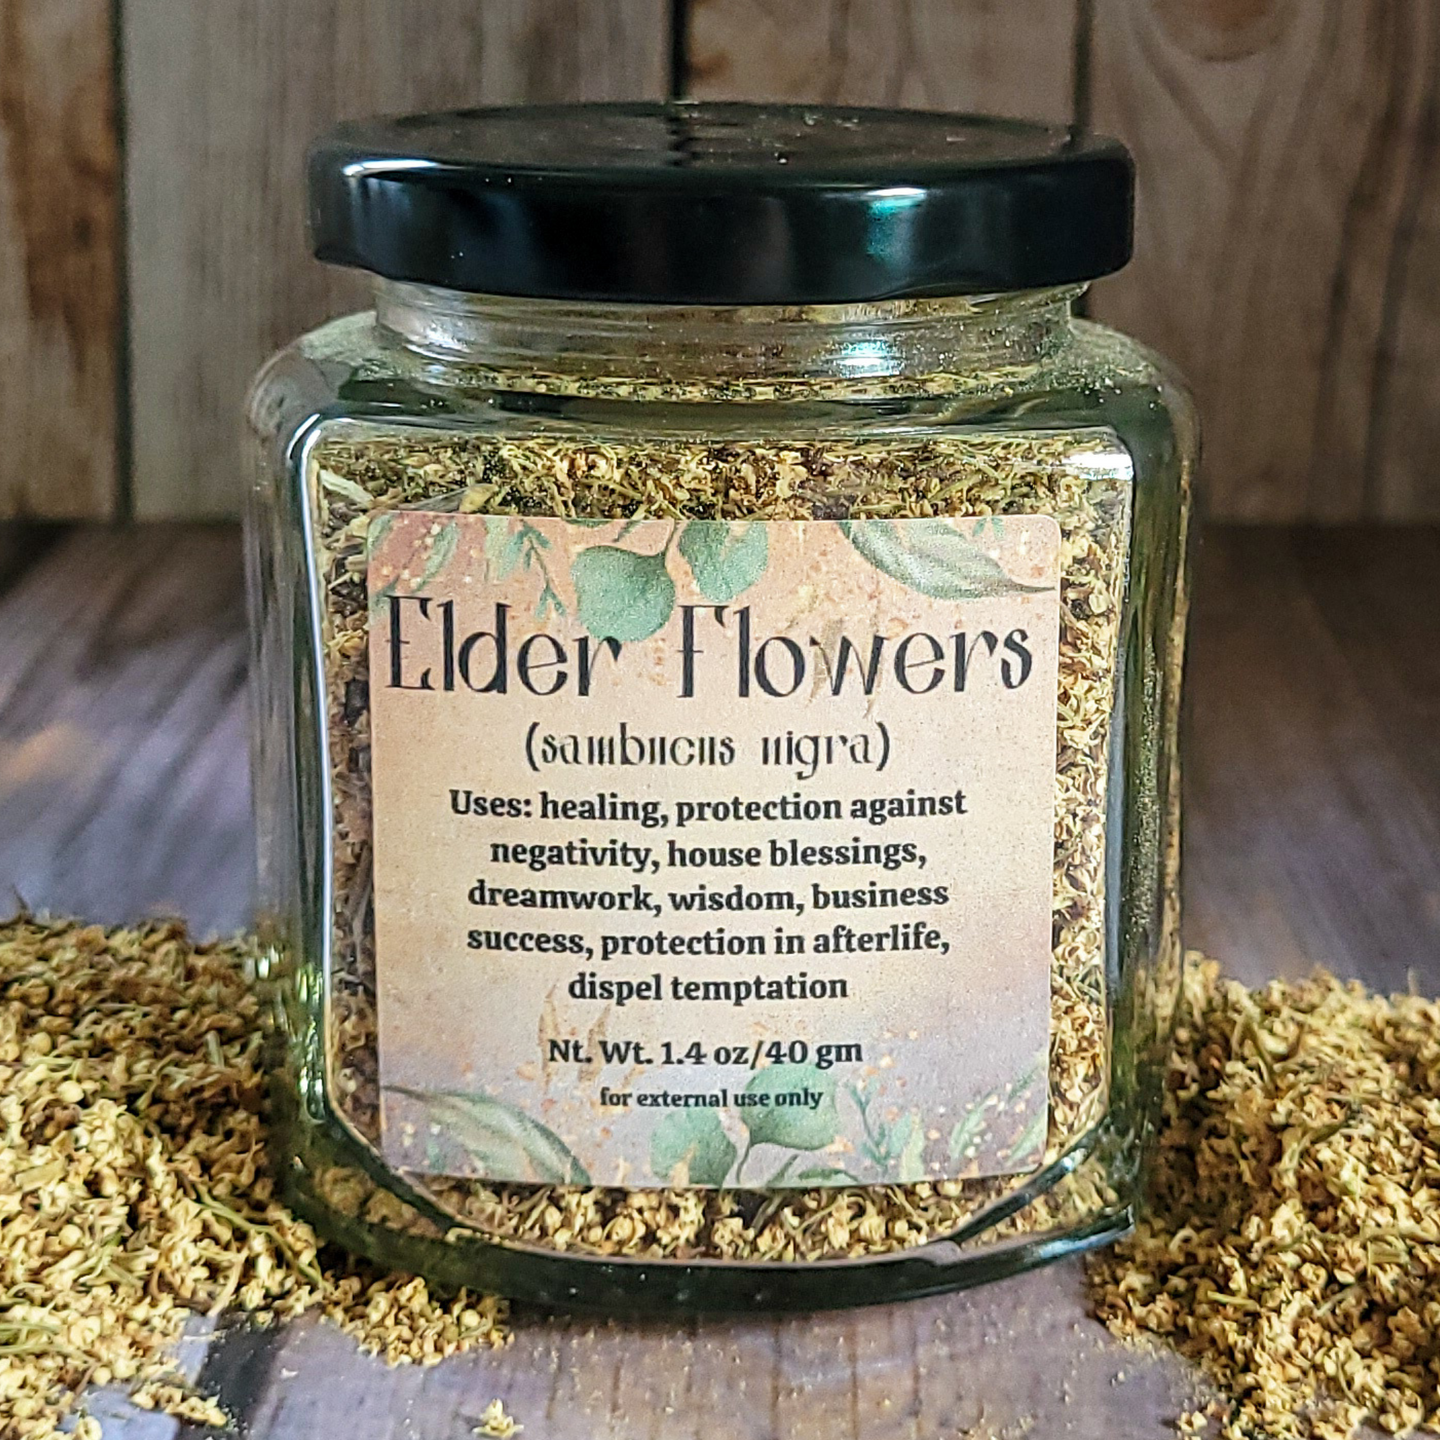 Elder flower organic Apothecary Herb Jar